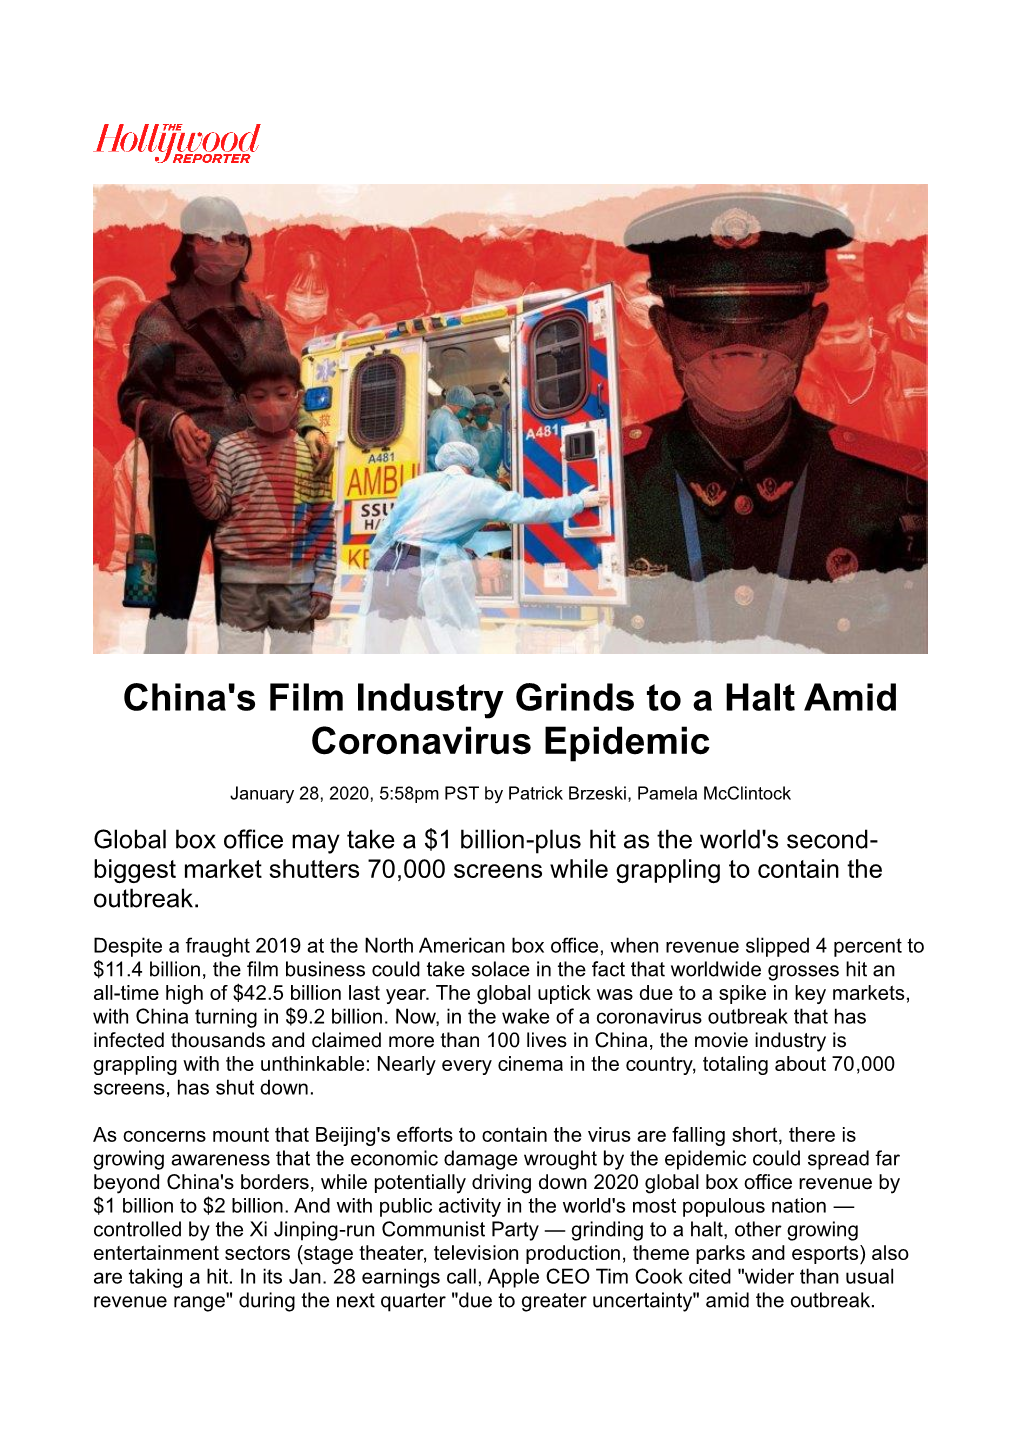 China's Film Industry Grinds to a Halt Amid Coronavirus Epidemic